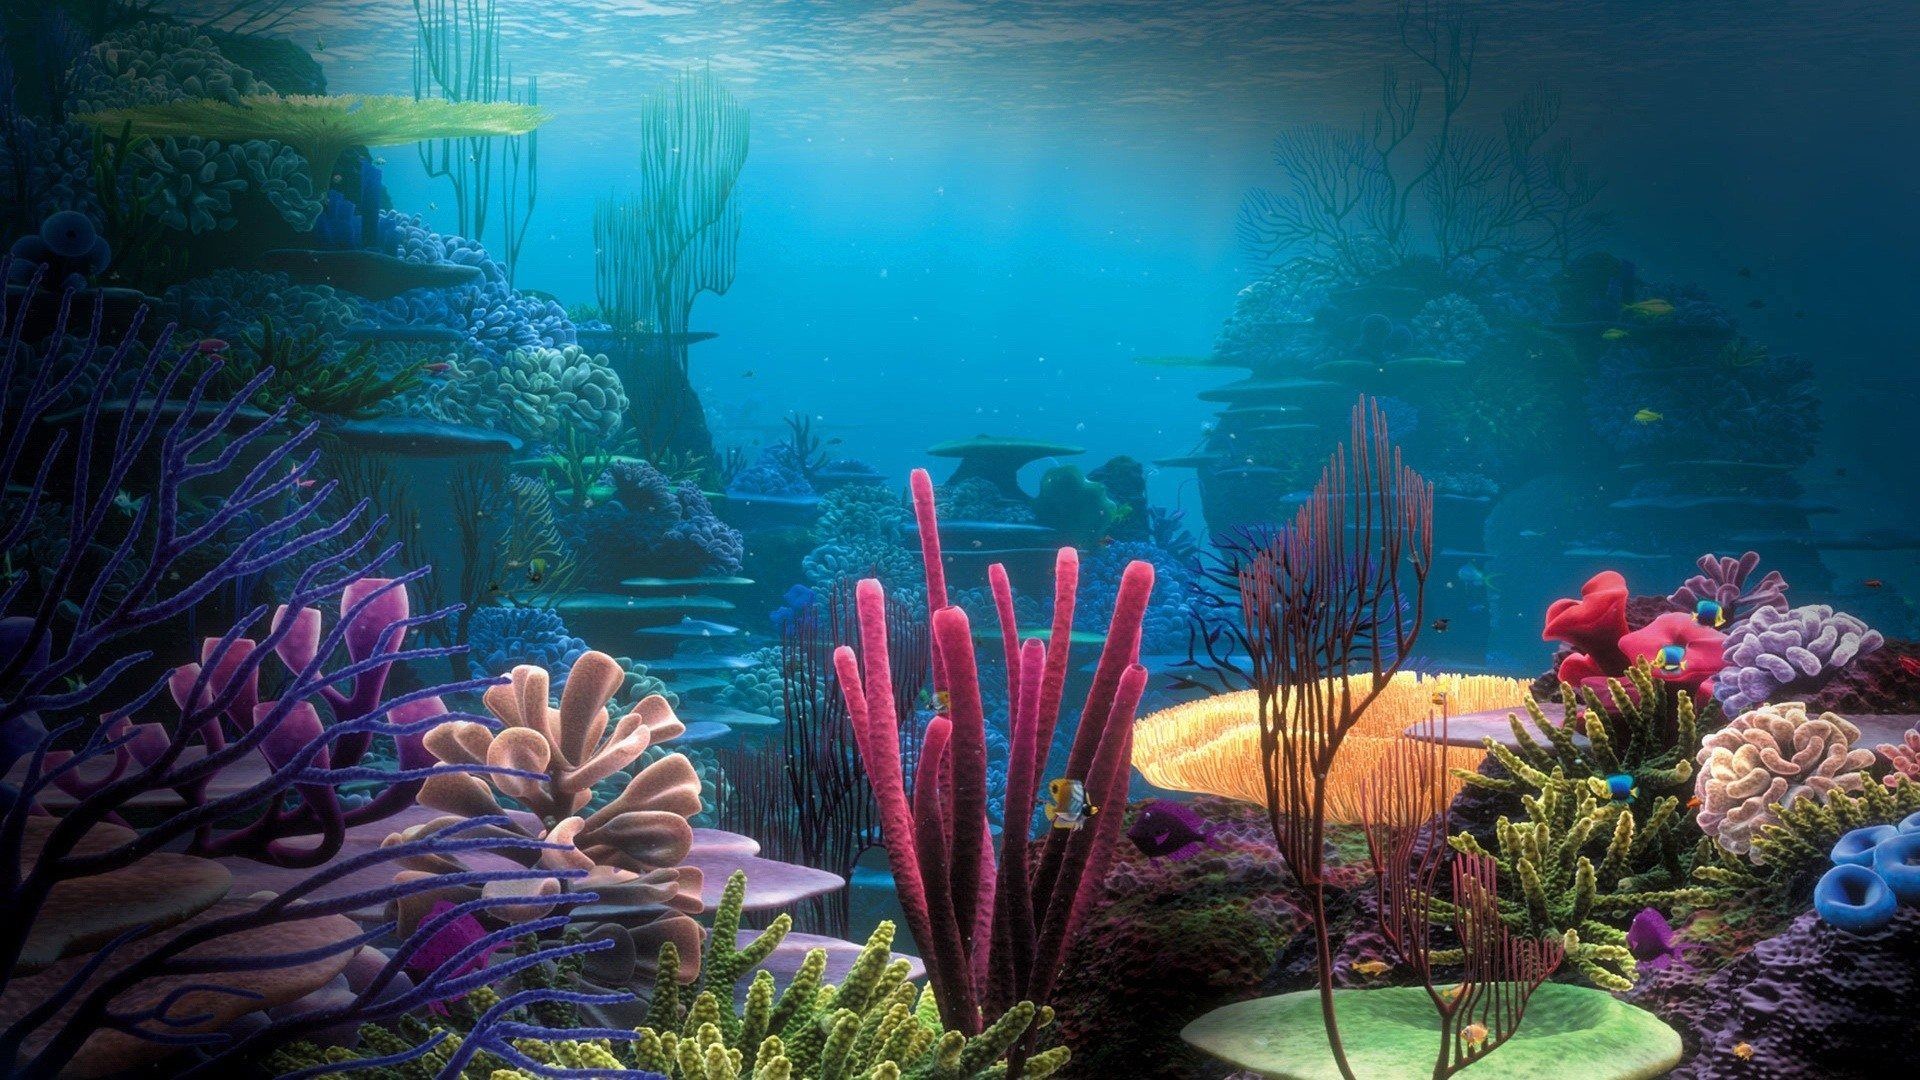 1920x1080 Underwater Photos of Coral Reefs | Download Underwater Coral Reef wallpaper  294550